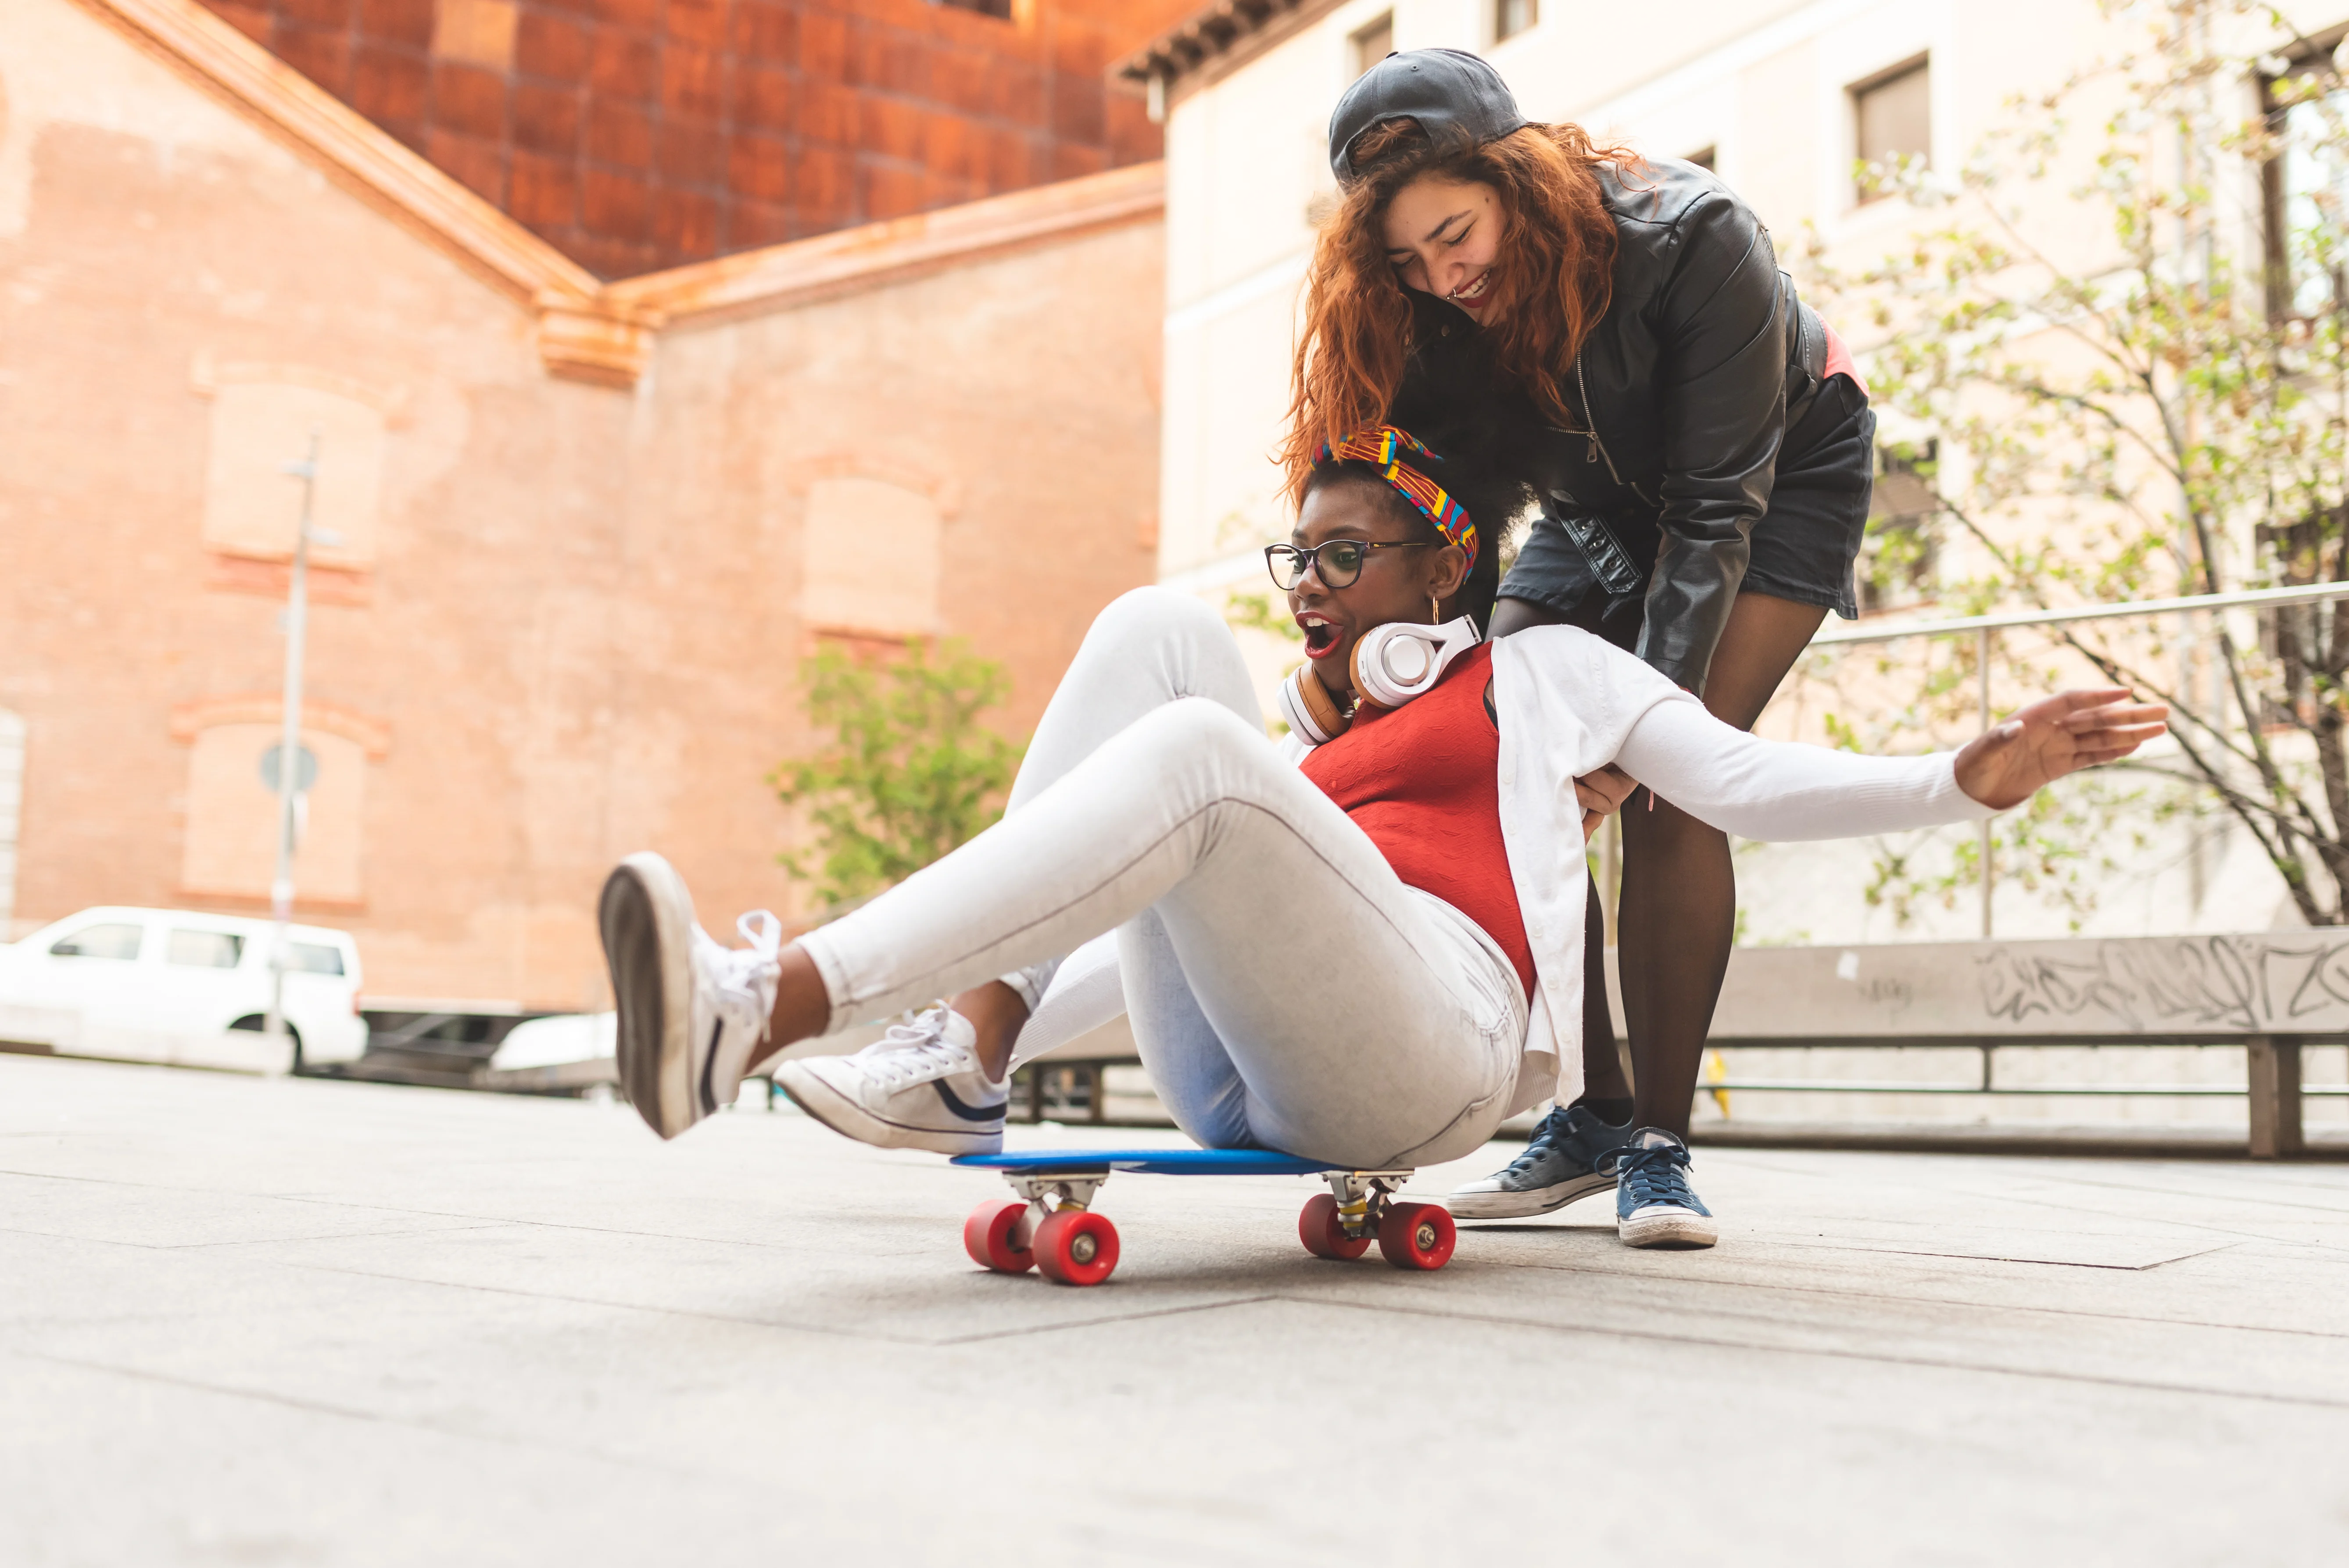 Two girls having fun on a skateboard